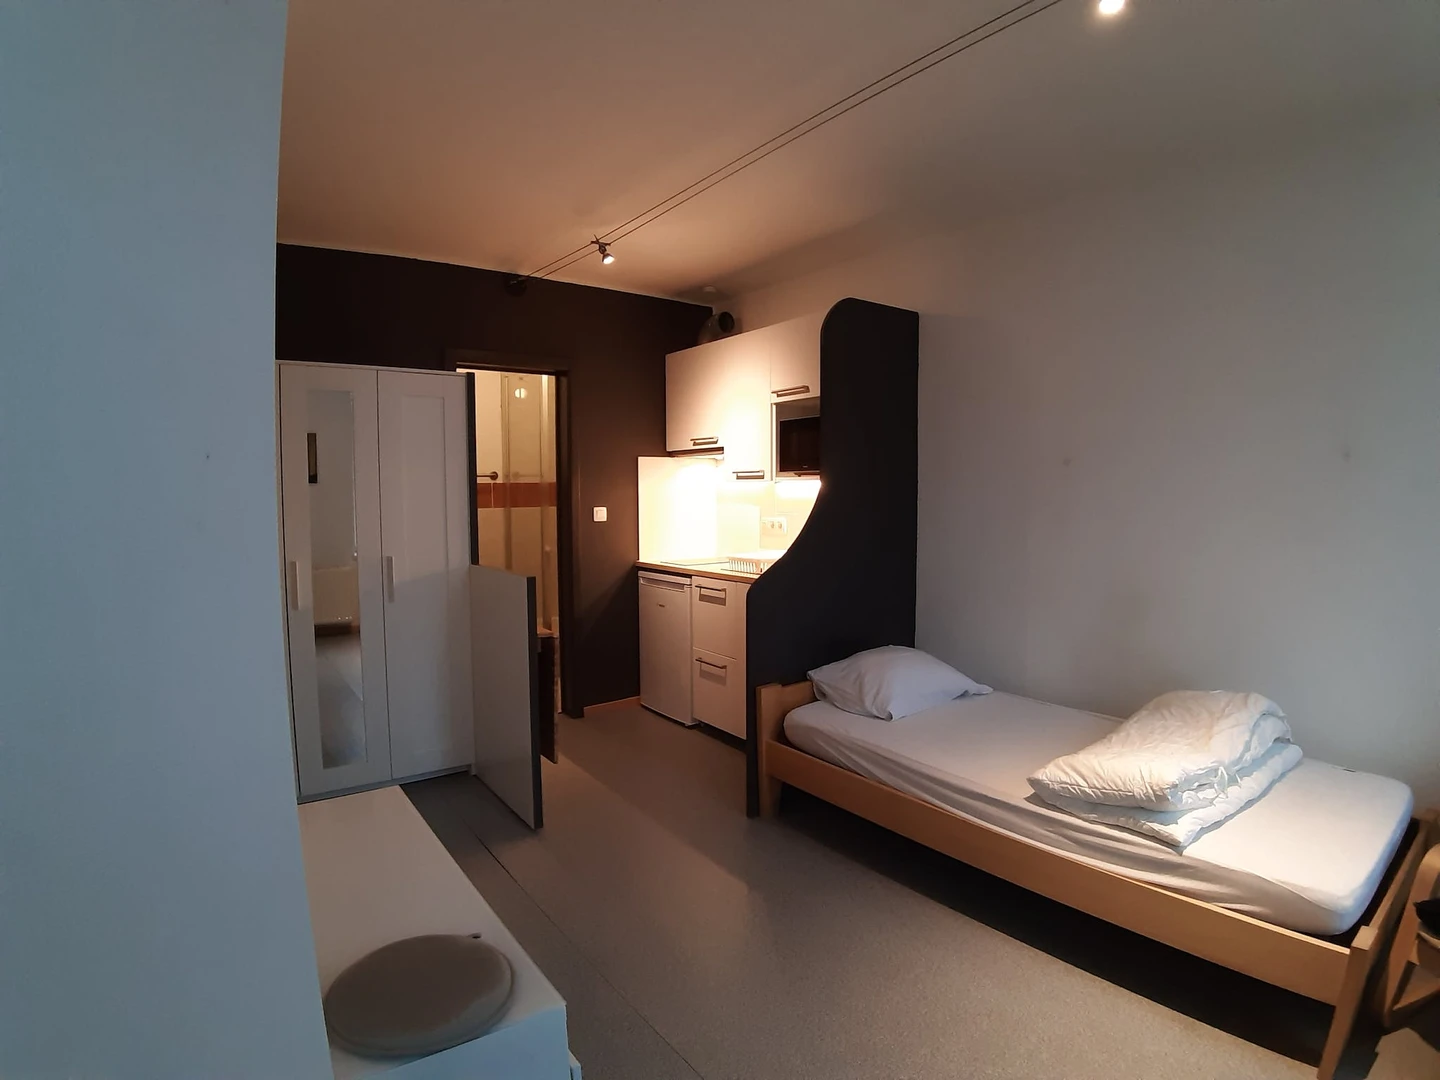 Logement de 2 chambres à Liège